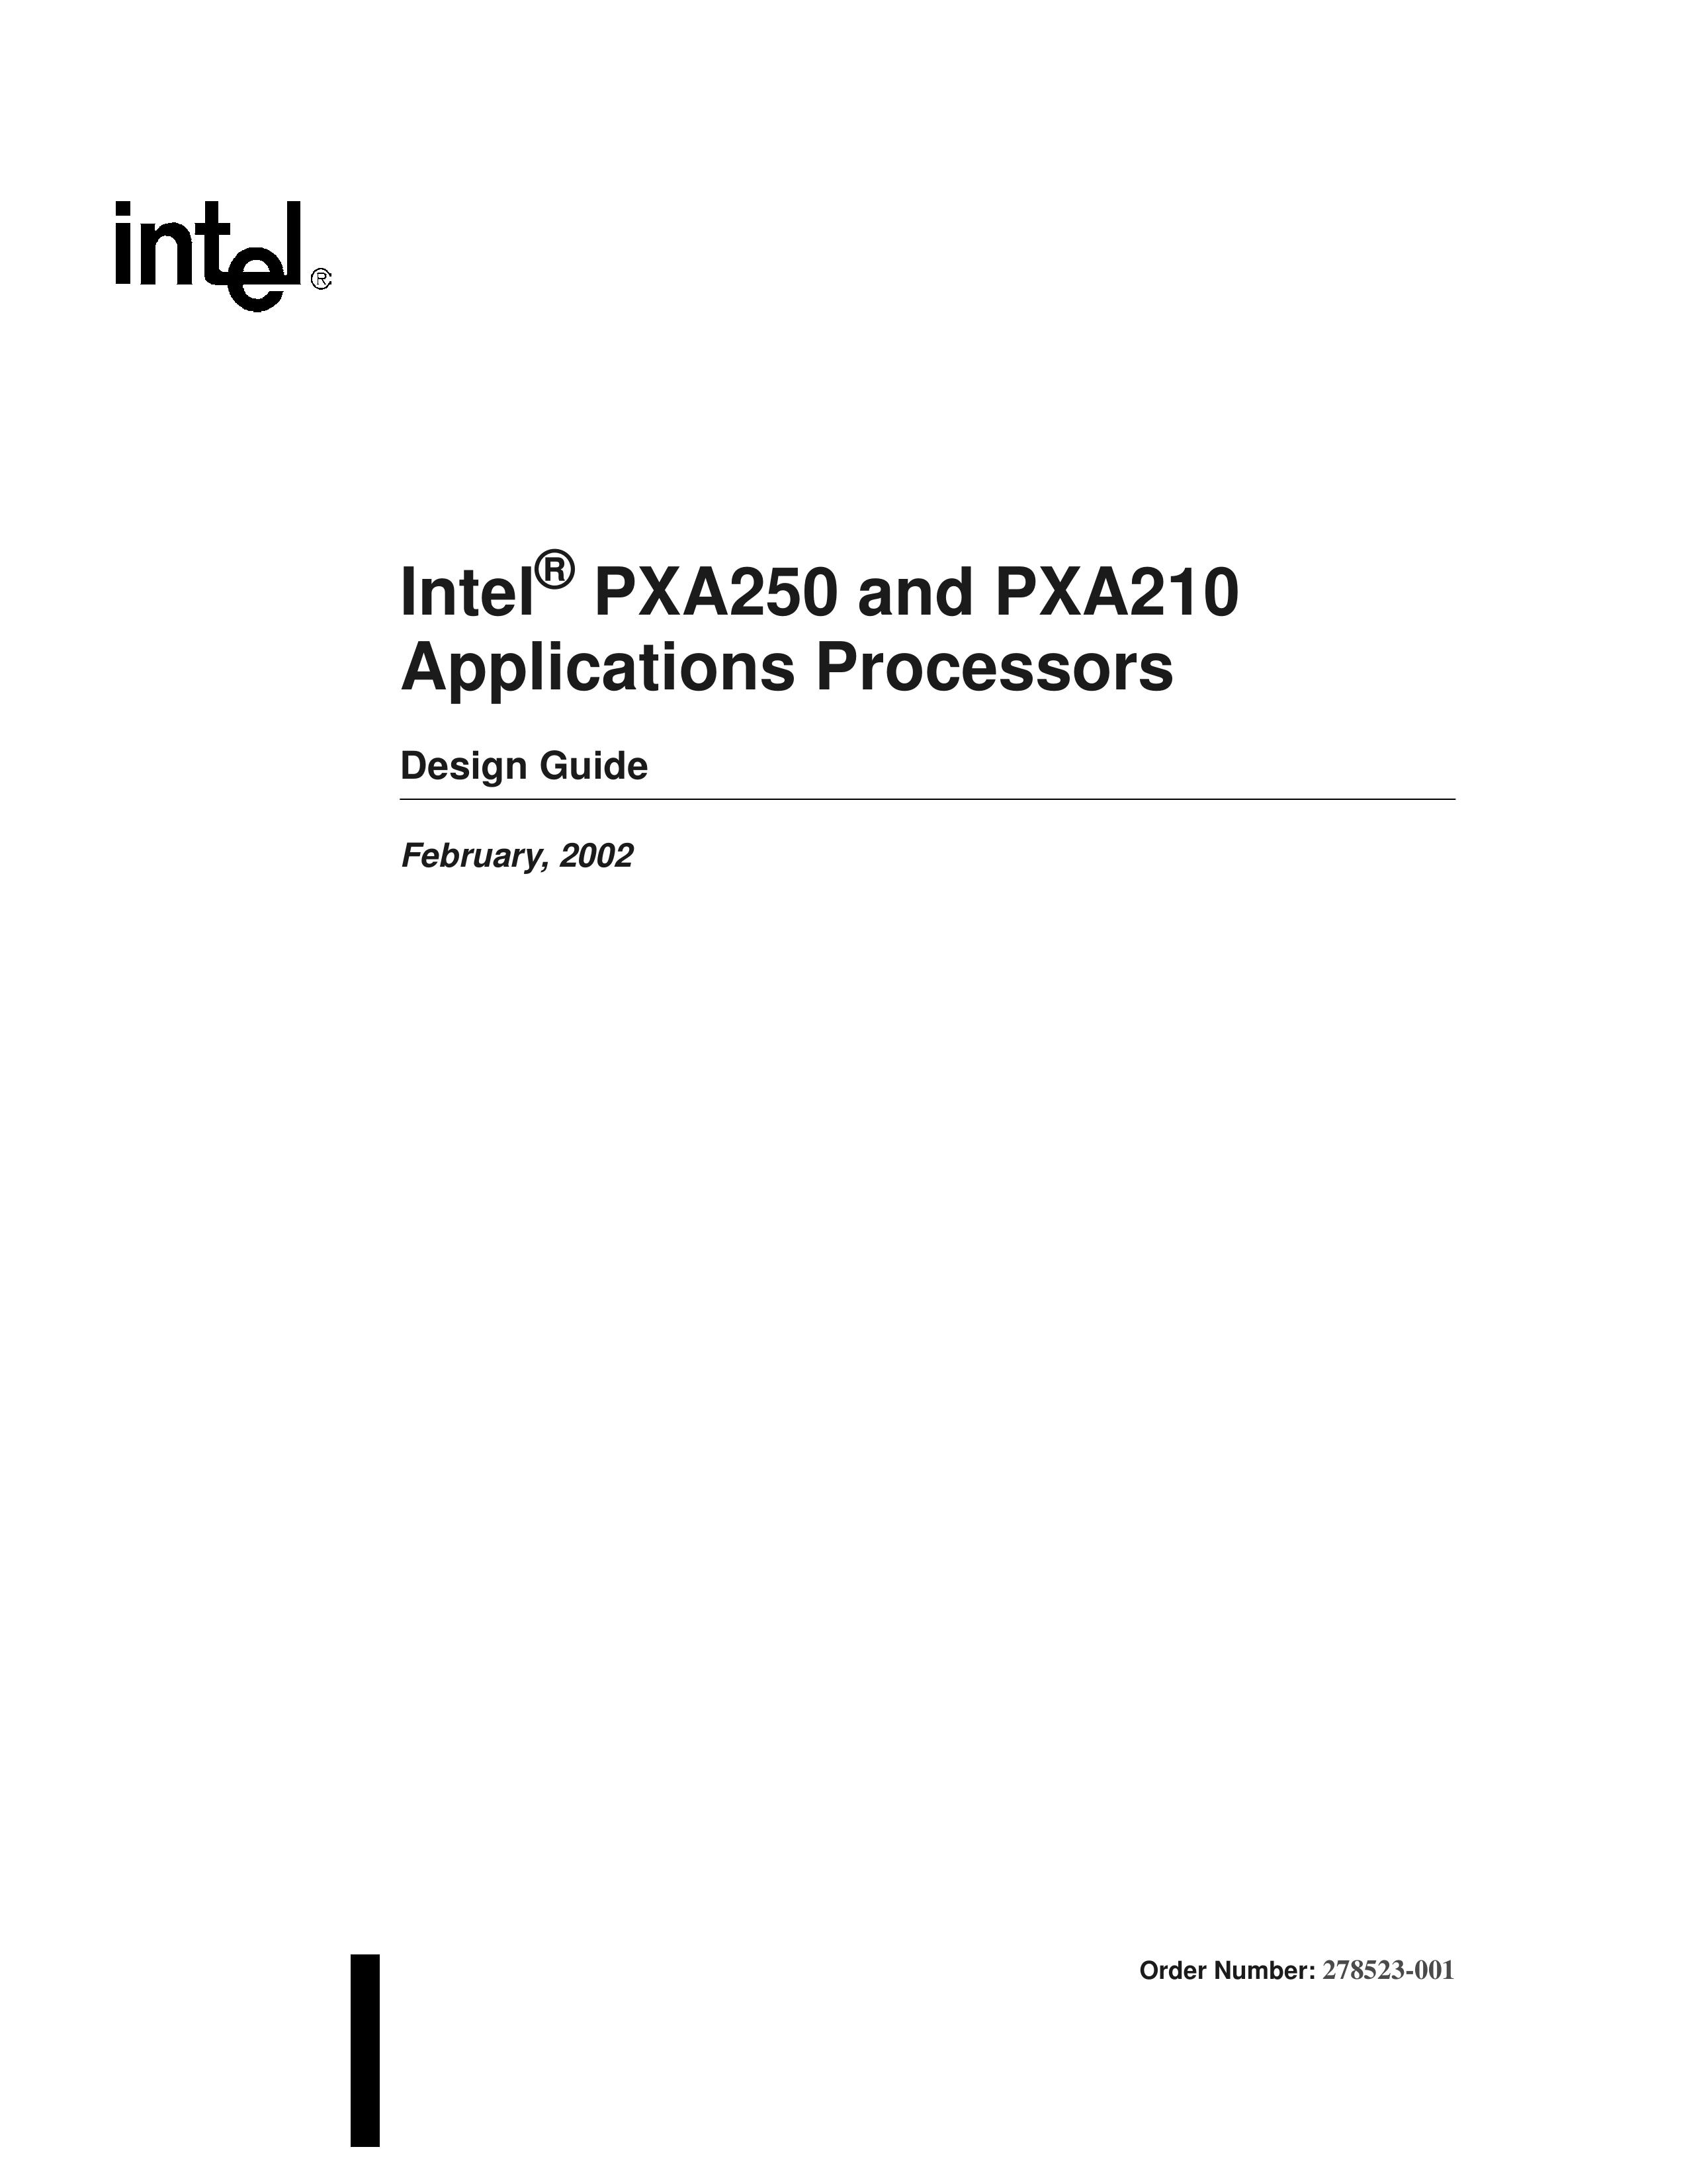 Intel PXA250 and PXA210 Chipper User Manual